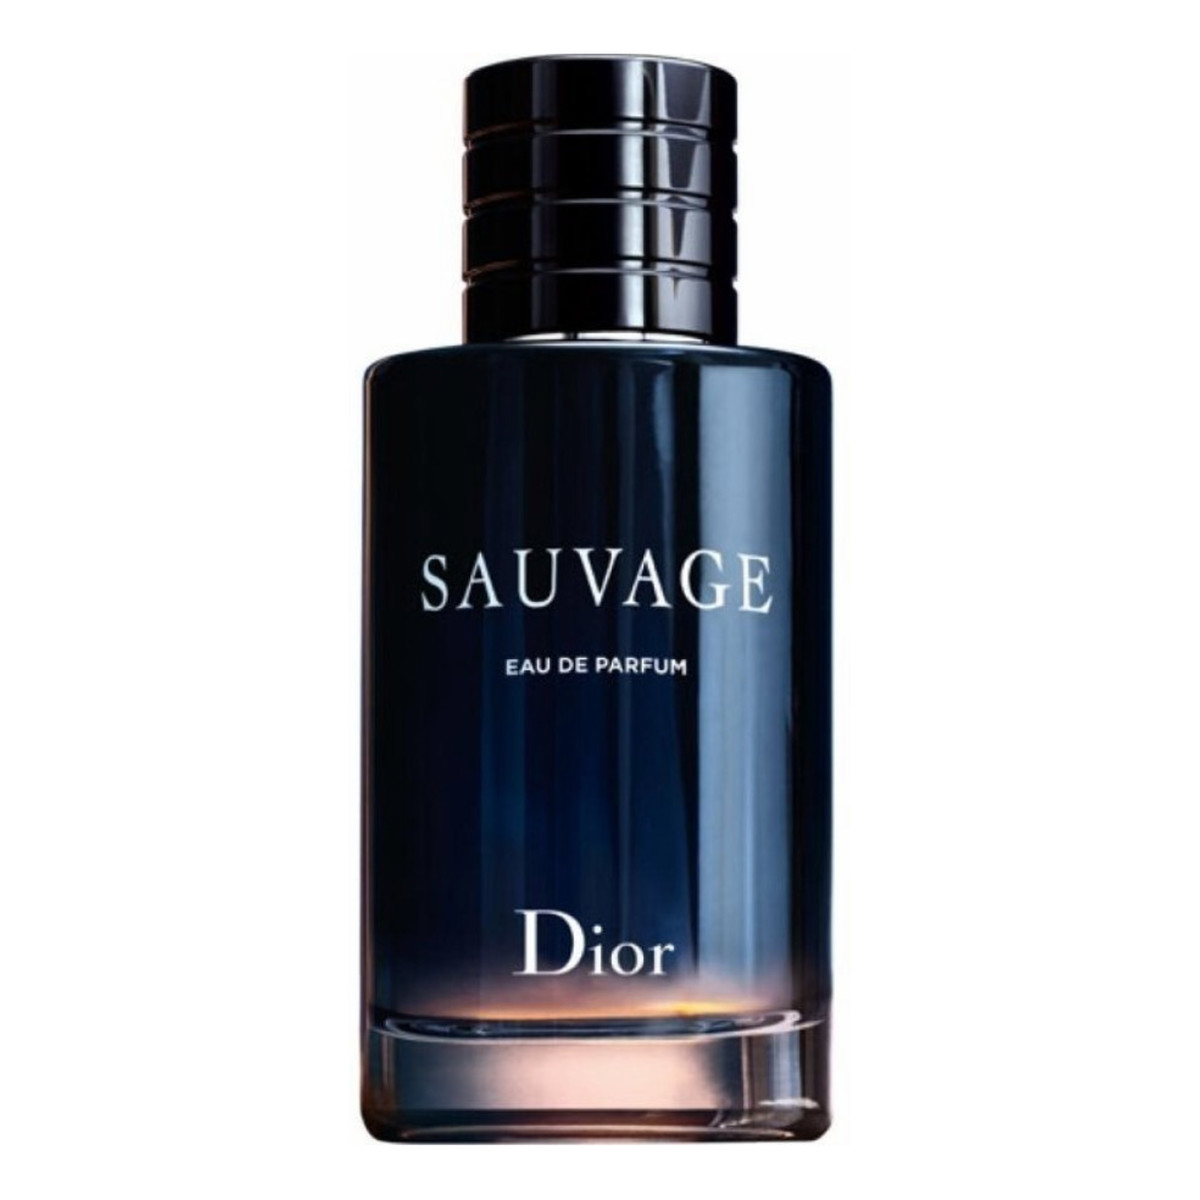 Dior Eau Sauvage woda perfumowana 60ml